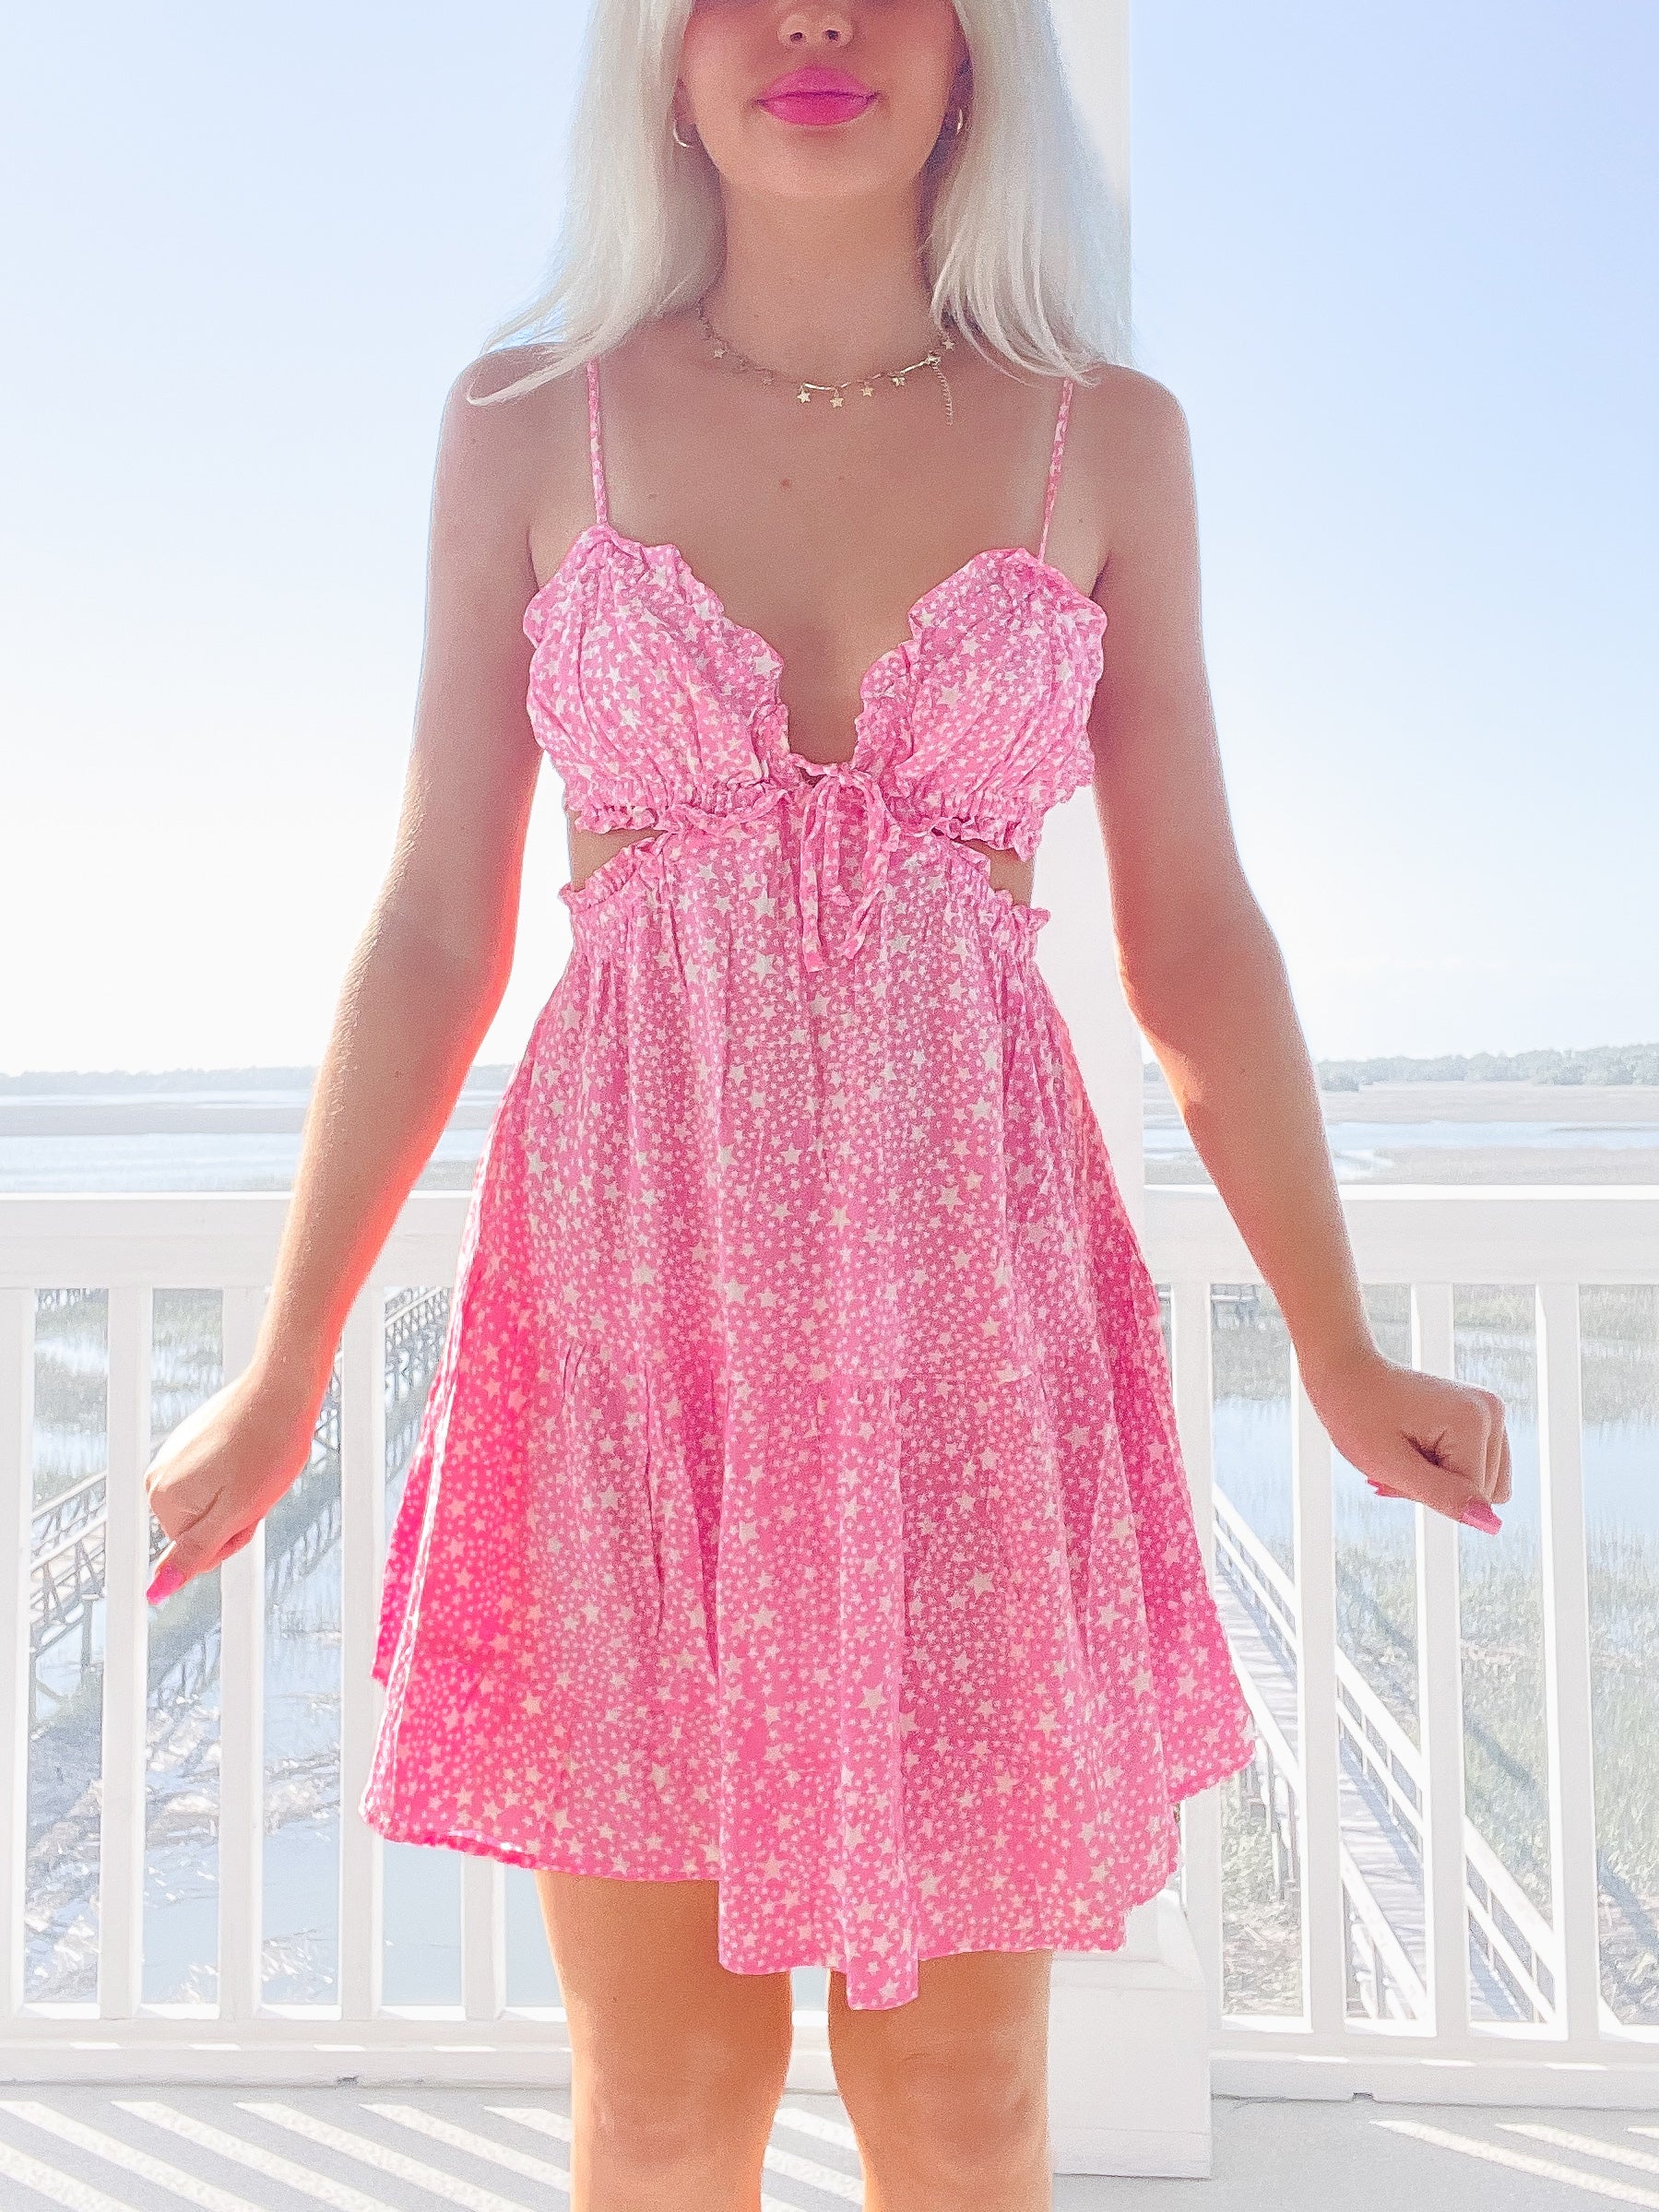 Star Bright Pink Dress | sassyshortcake.com | Sassy Shortcake